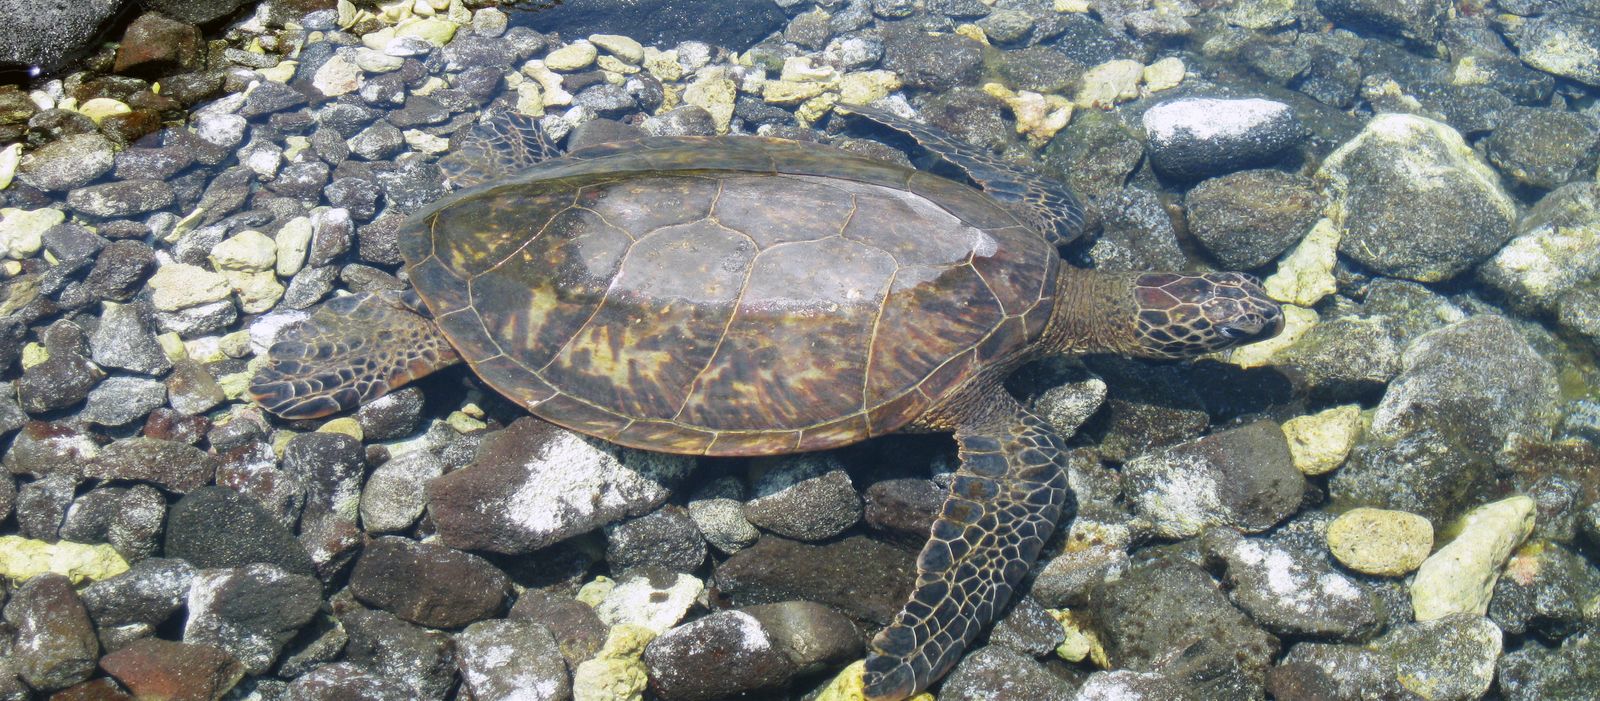 Wasserschildkröten im Historical Park "Puúhonua o Hónaunau"